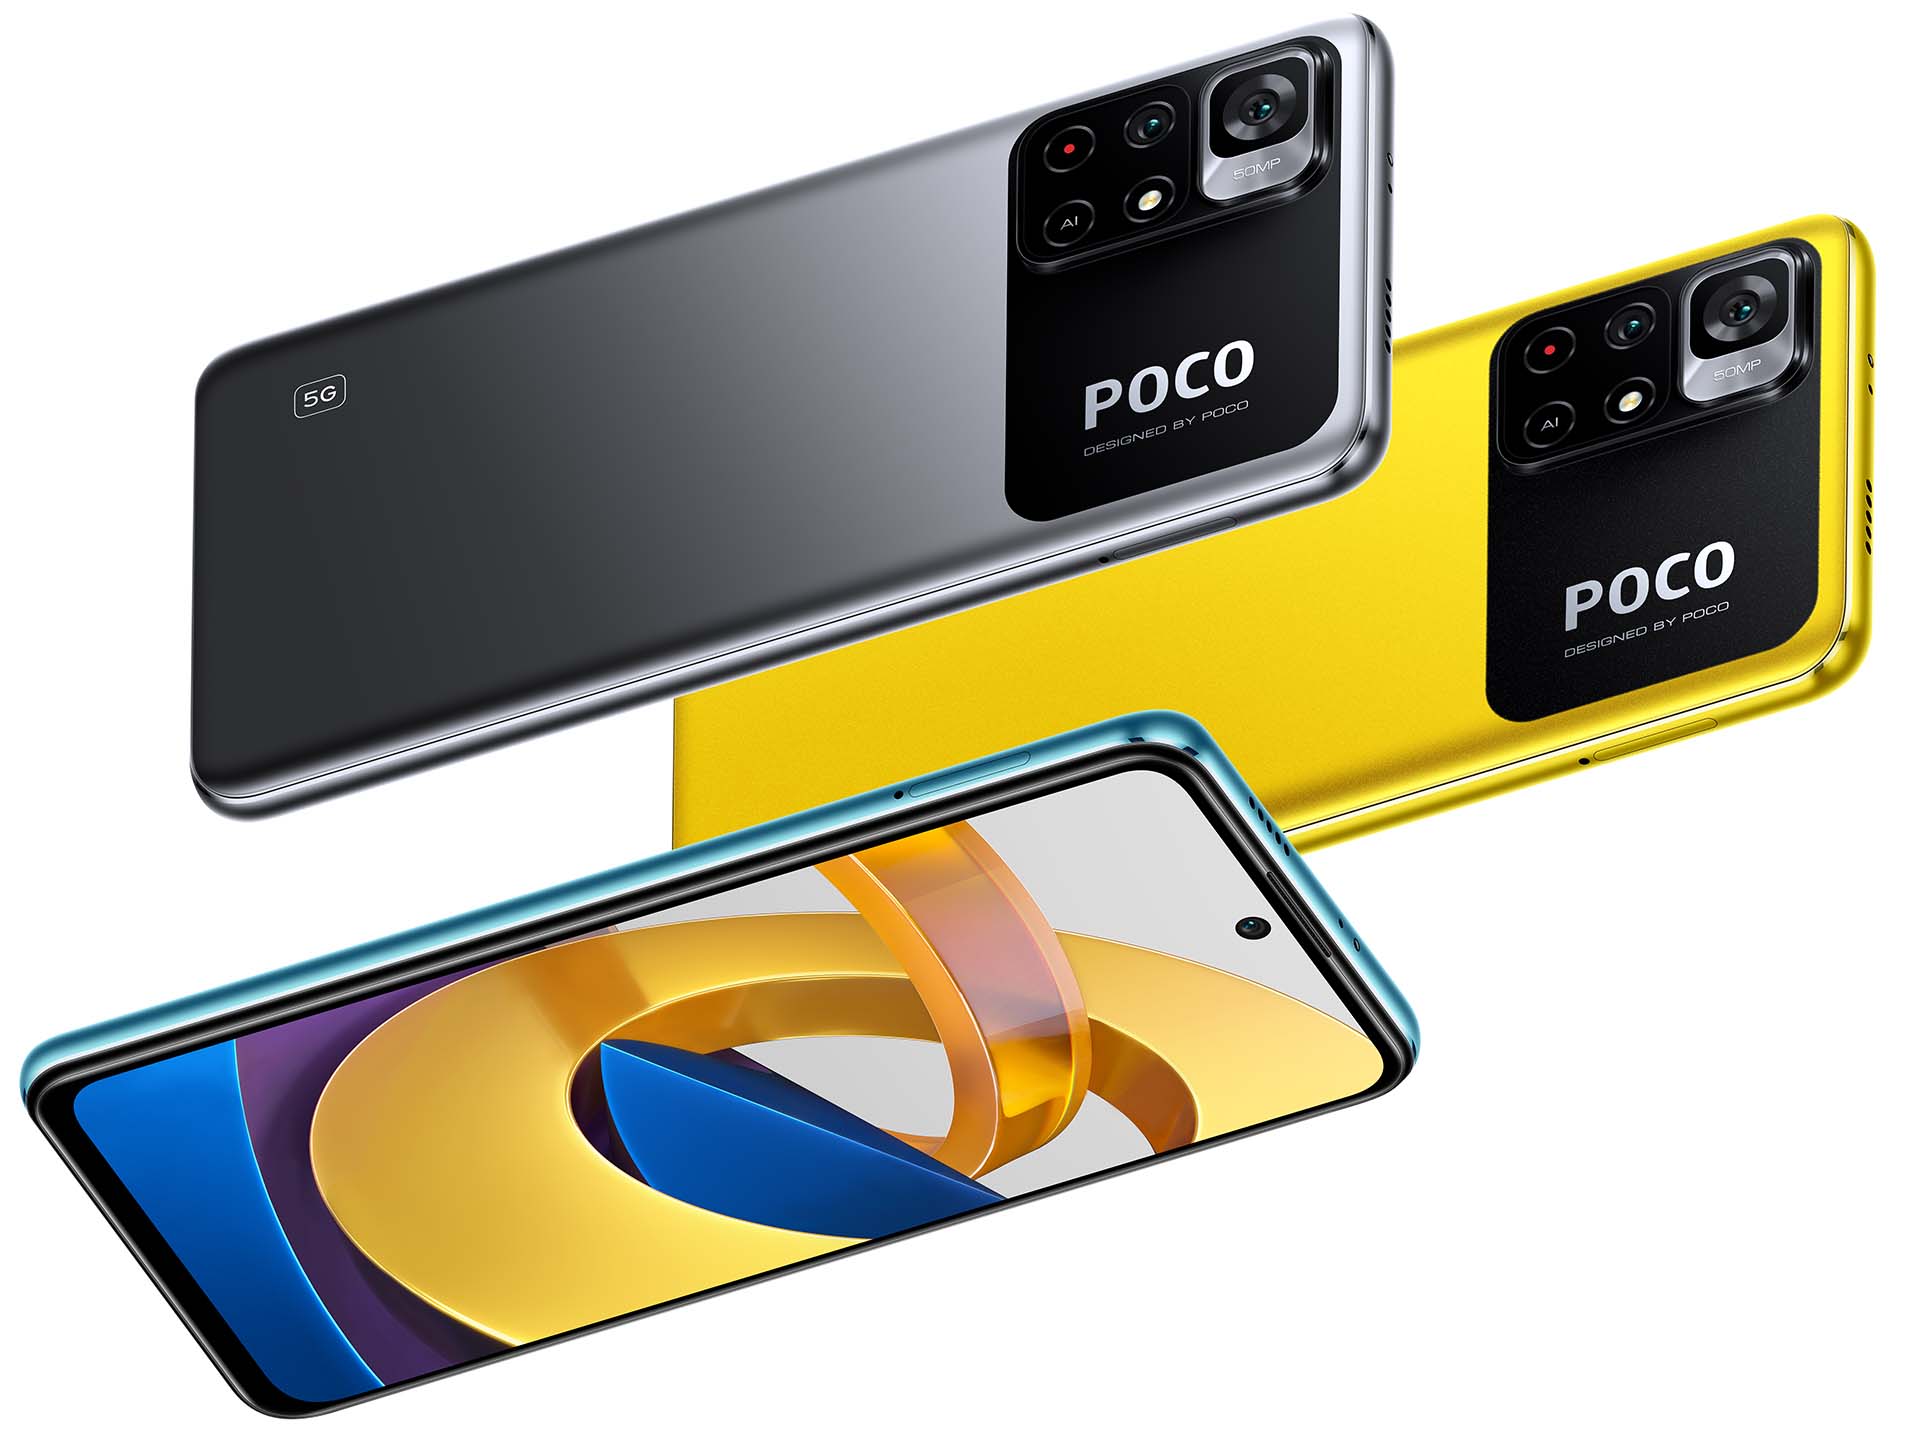 Poco M4 Pro Review - Budget LTE Smartphone Champion